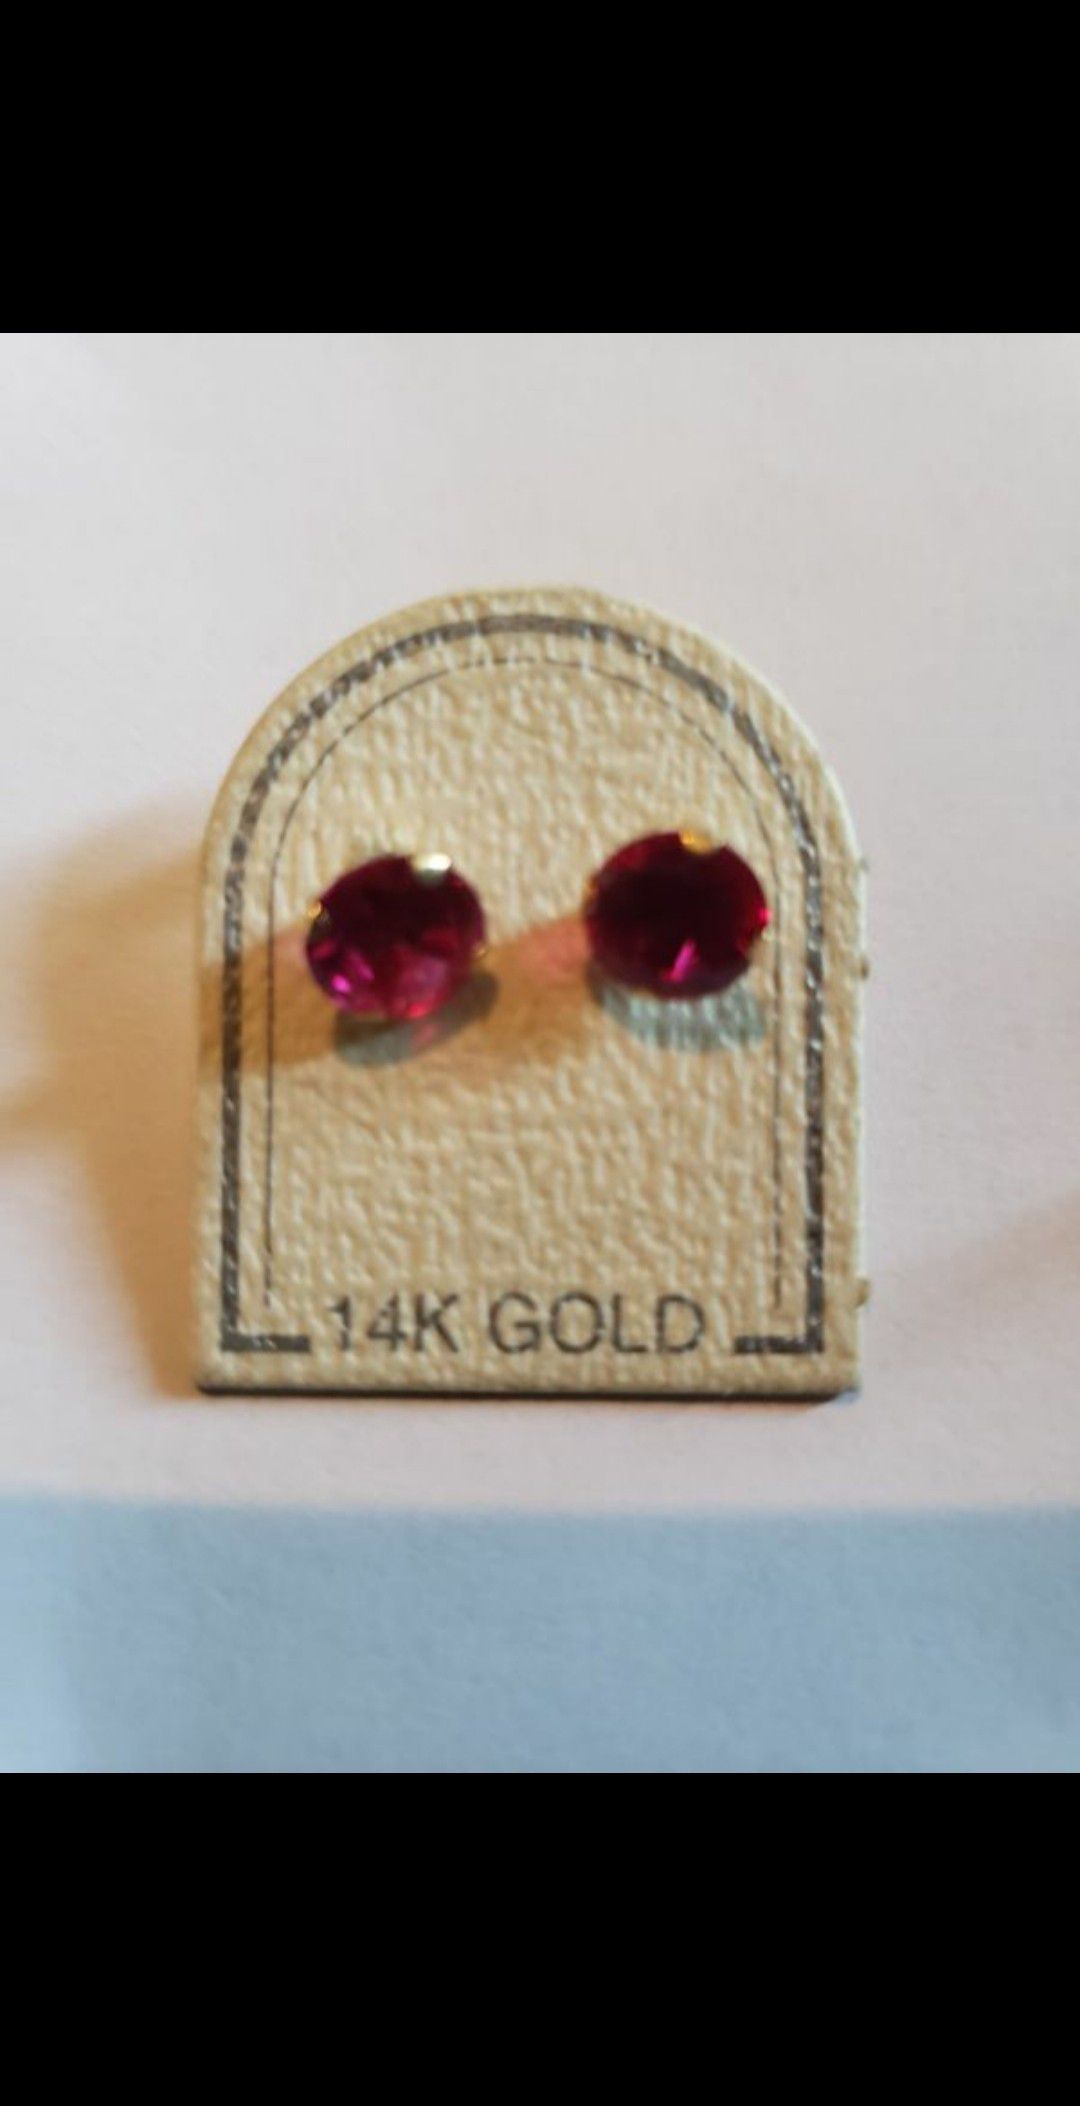 14k real gold earrings